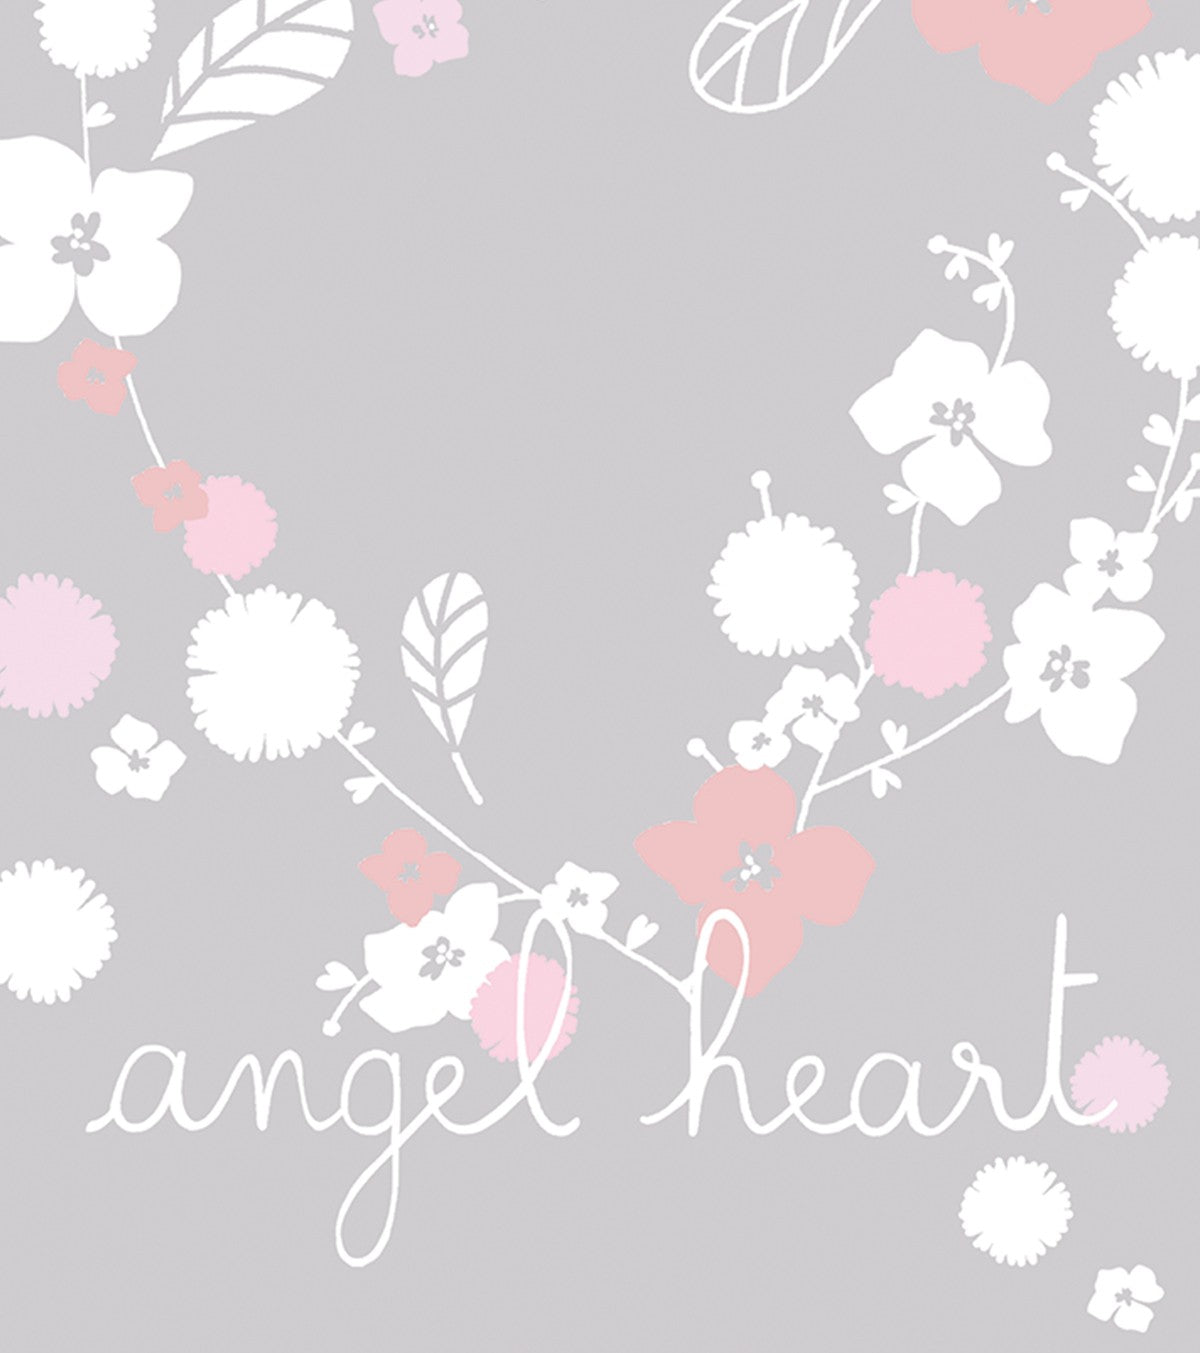 ANGEL - Children's poster - Wreath of flowers